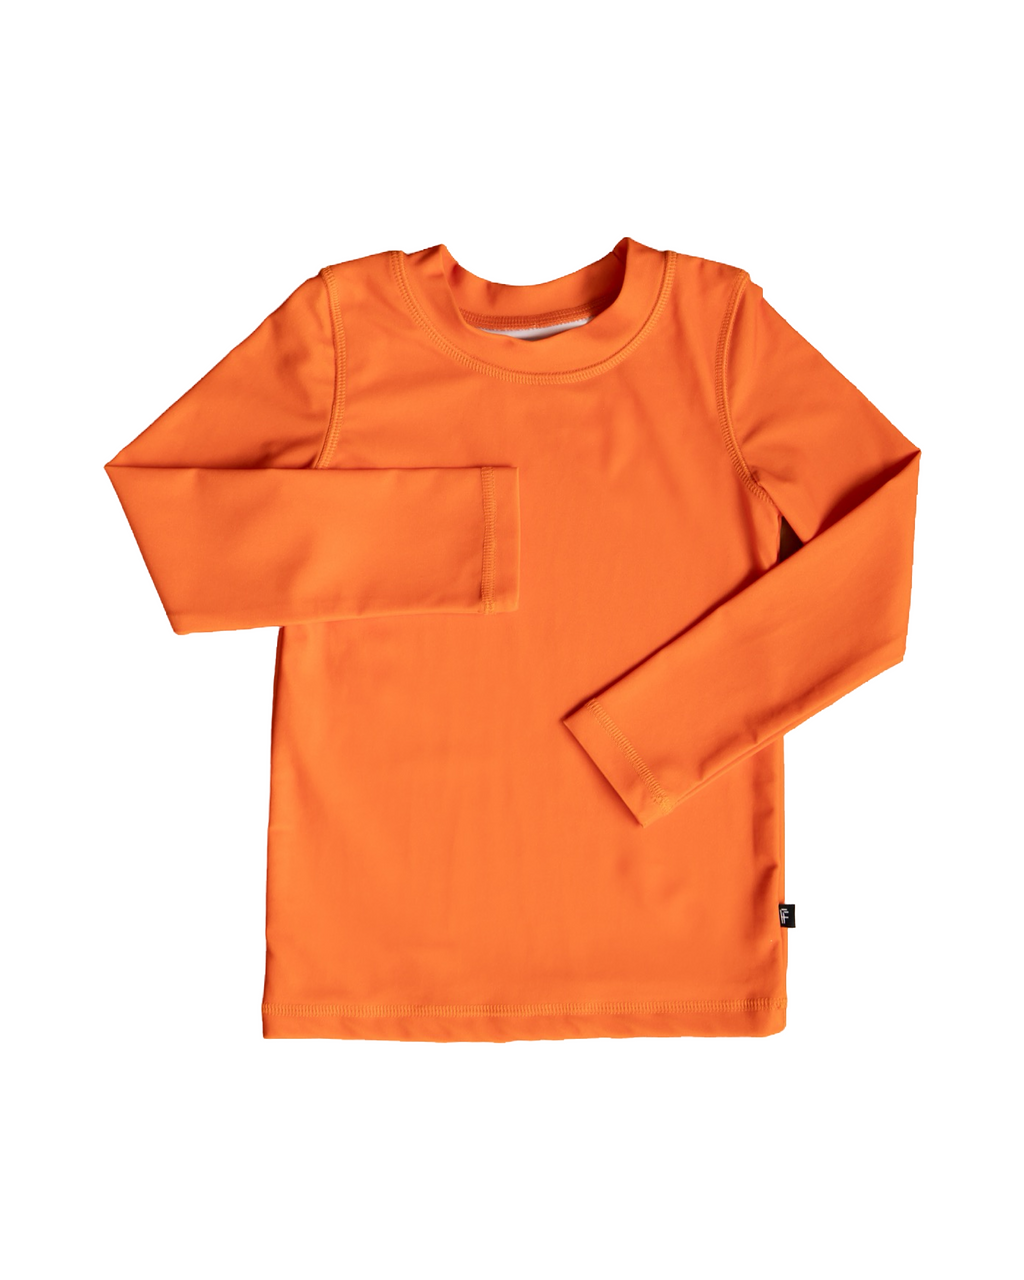 Neon Orange Long Sleeve Rash Guard Top